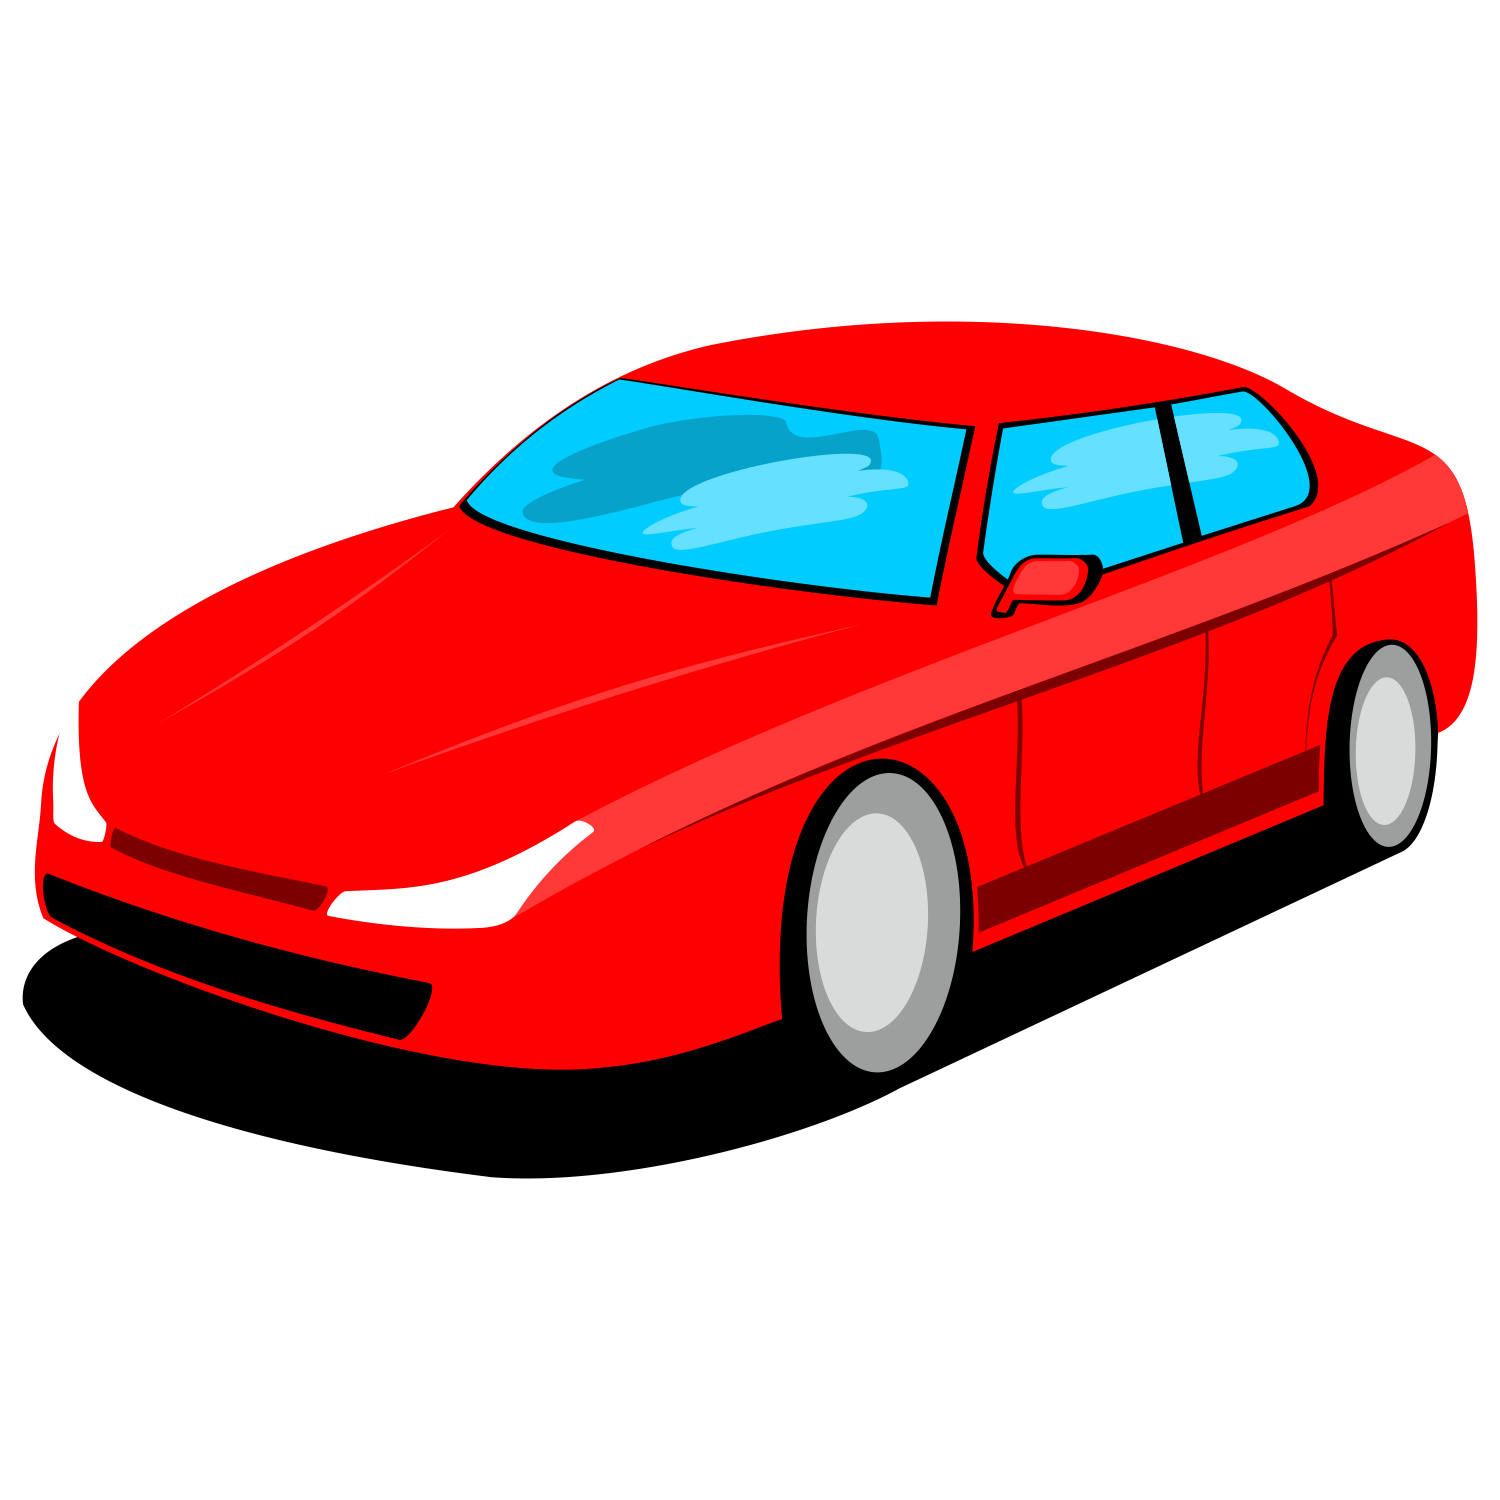 car illustration vector free download